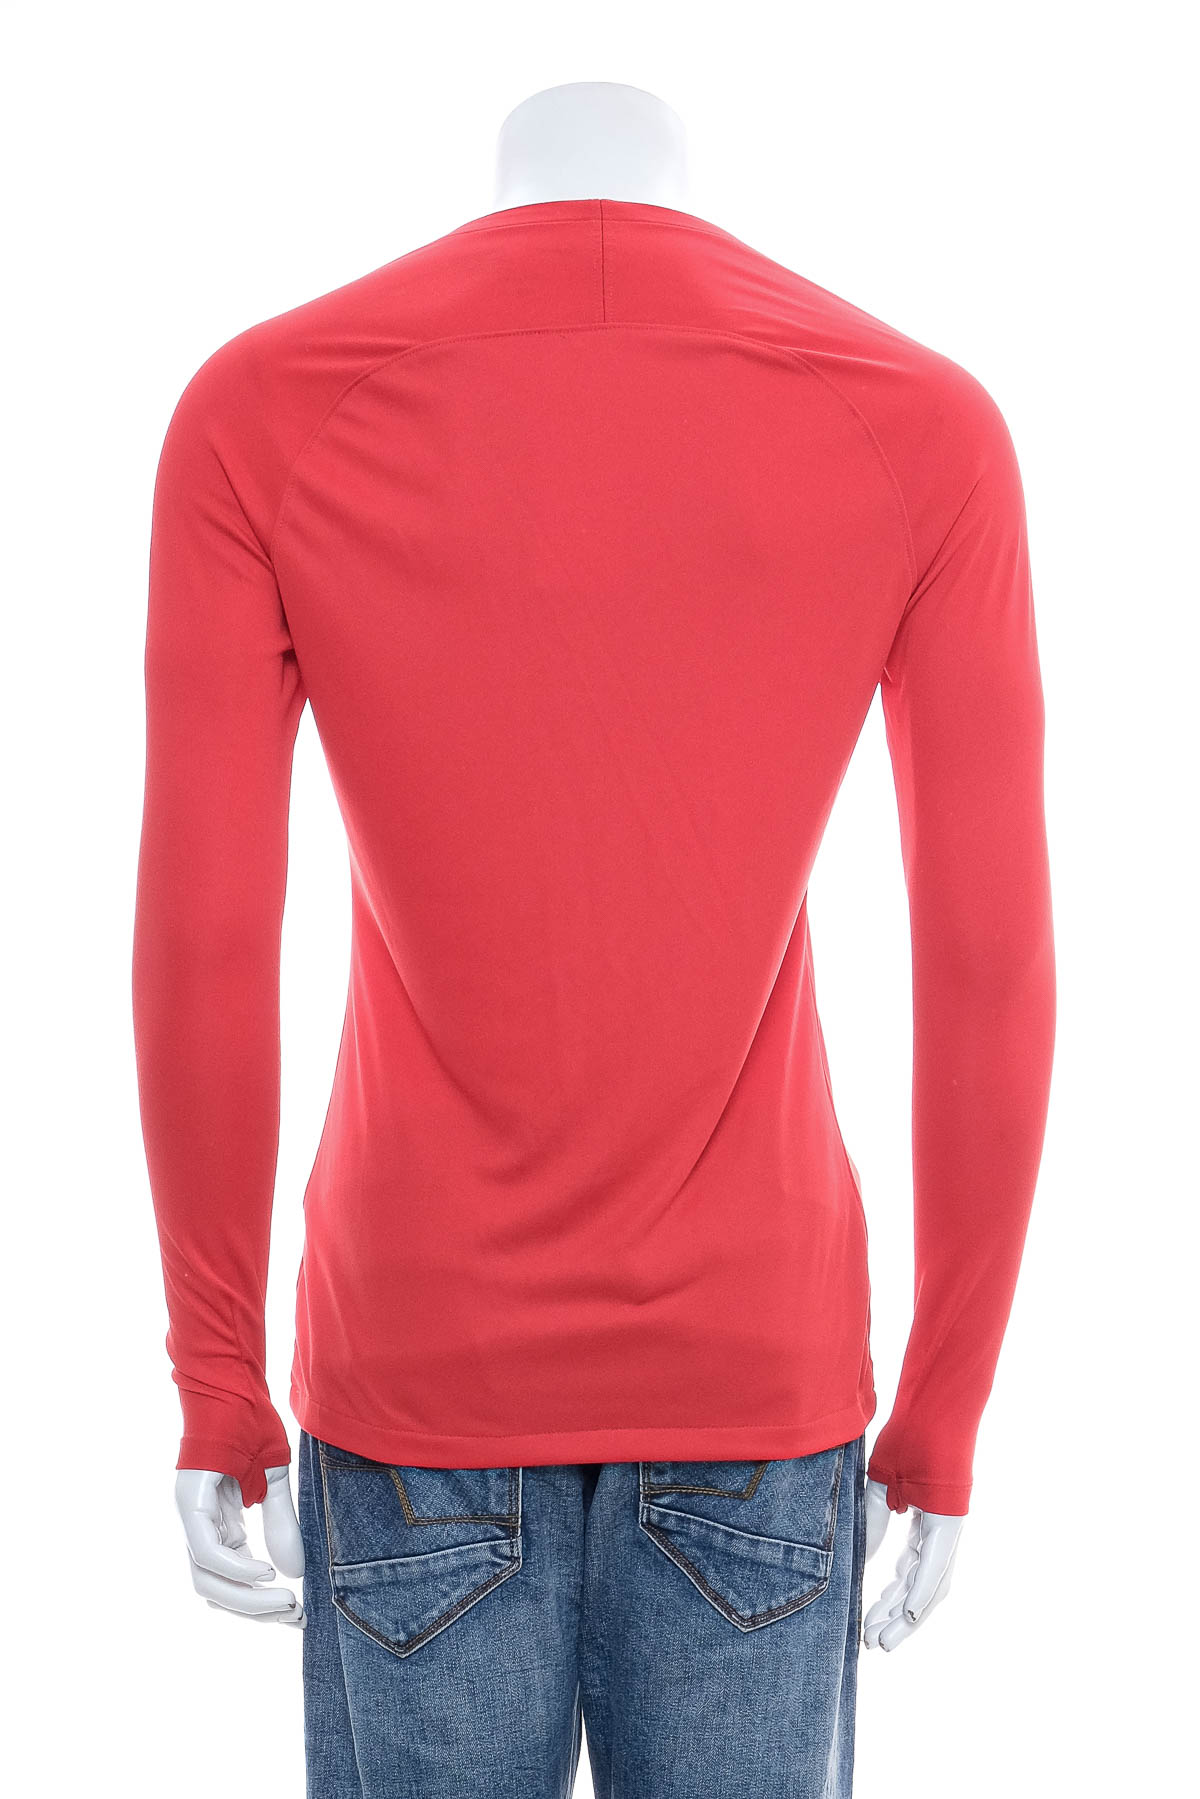 Men's sport blouse - NIKE - 1